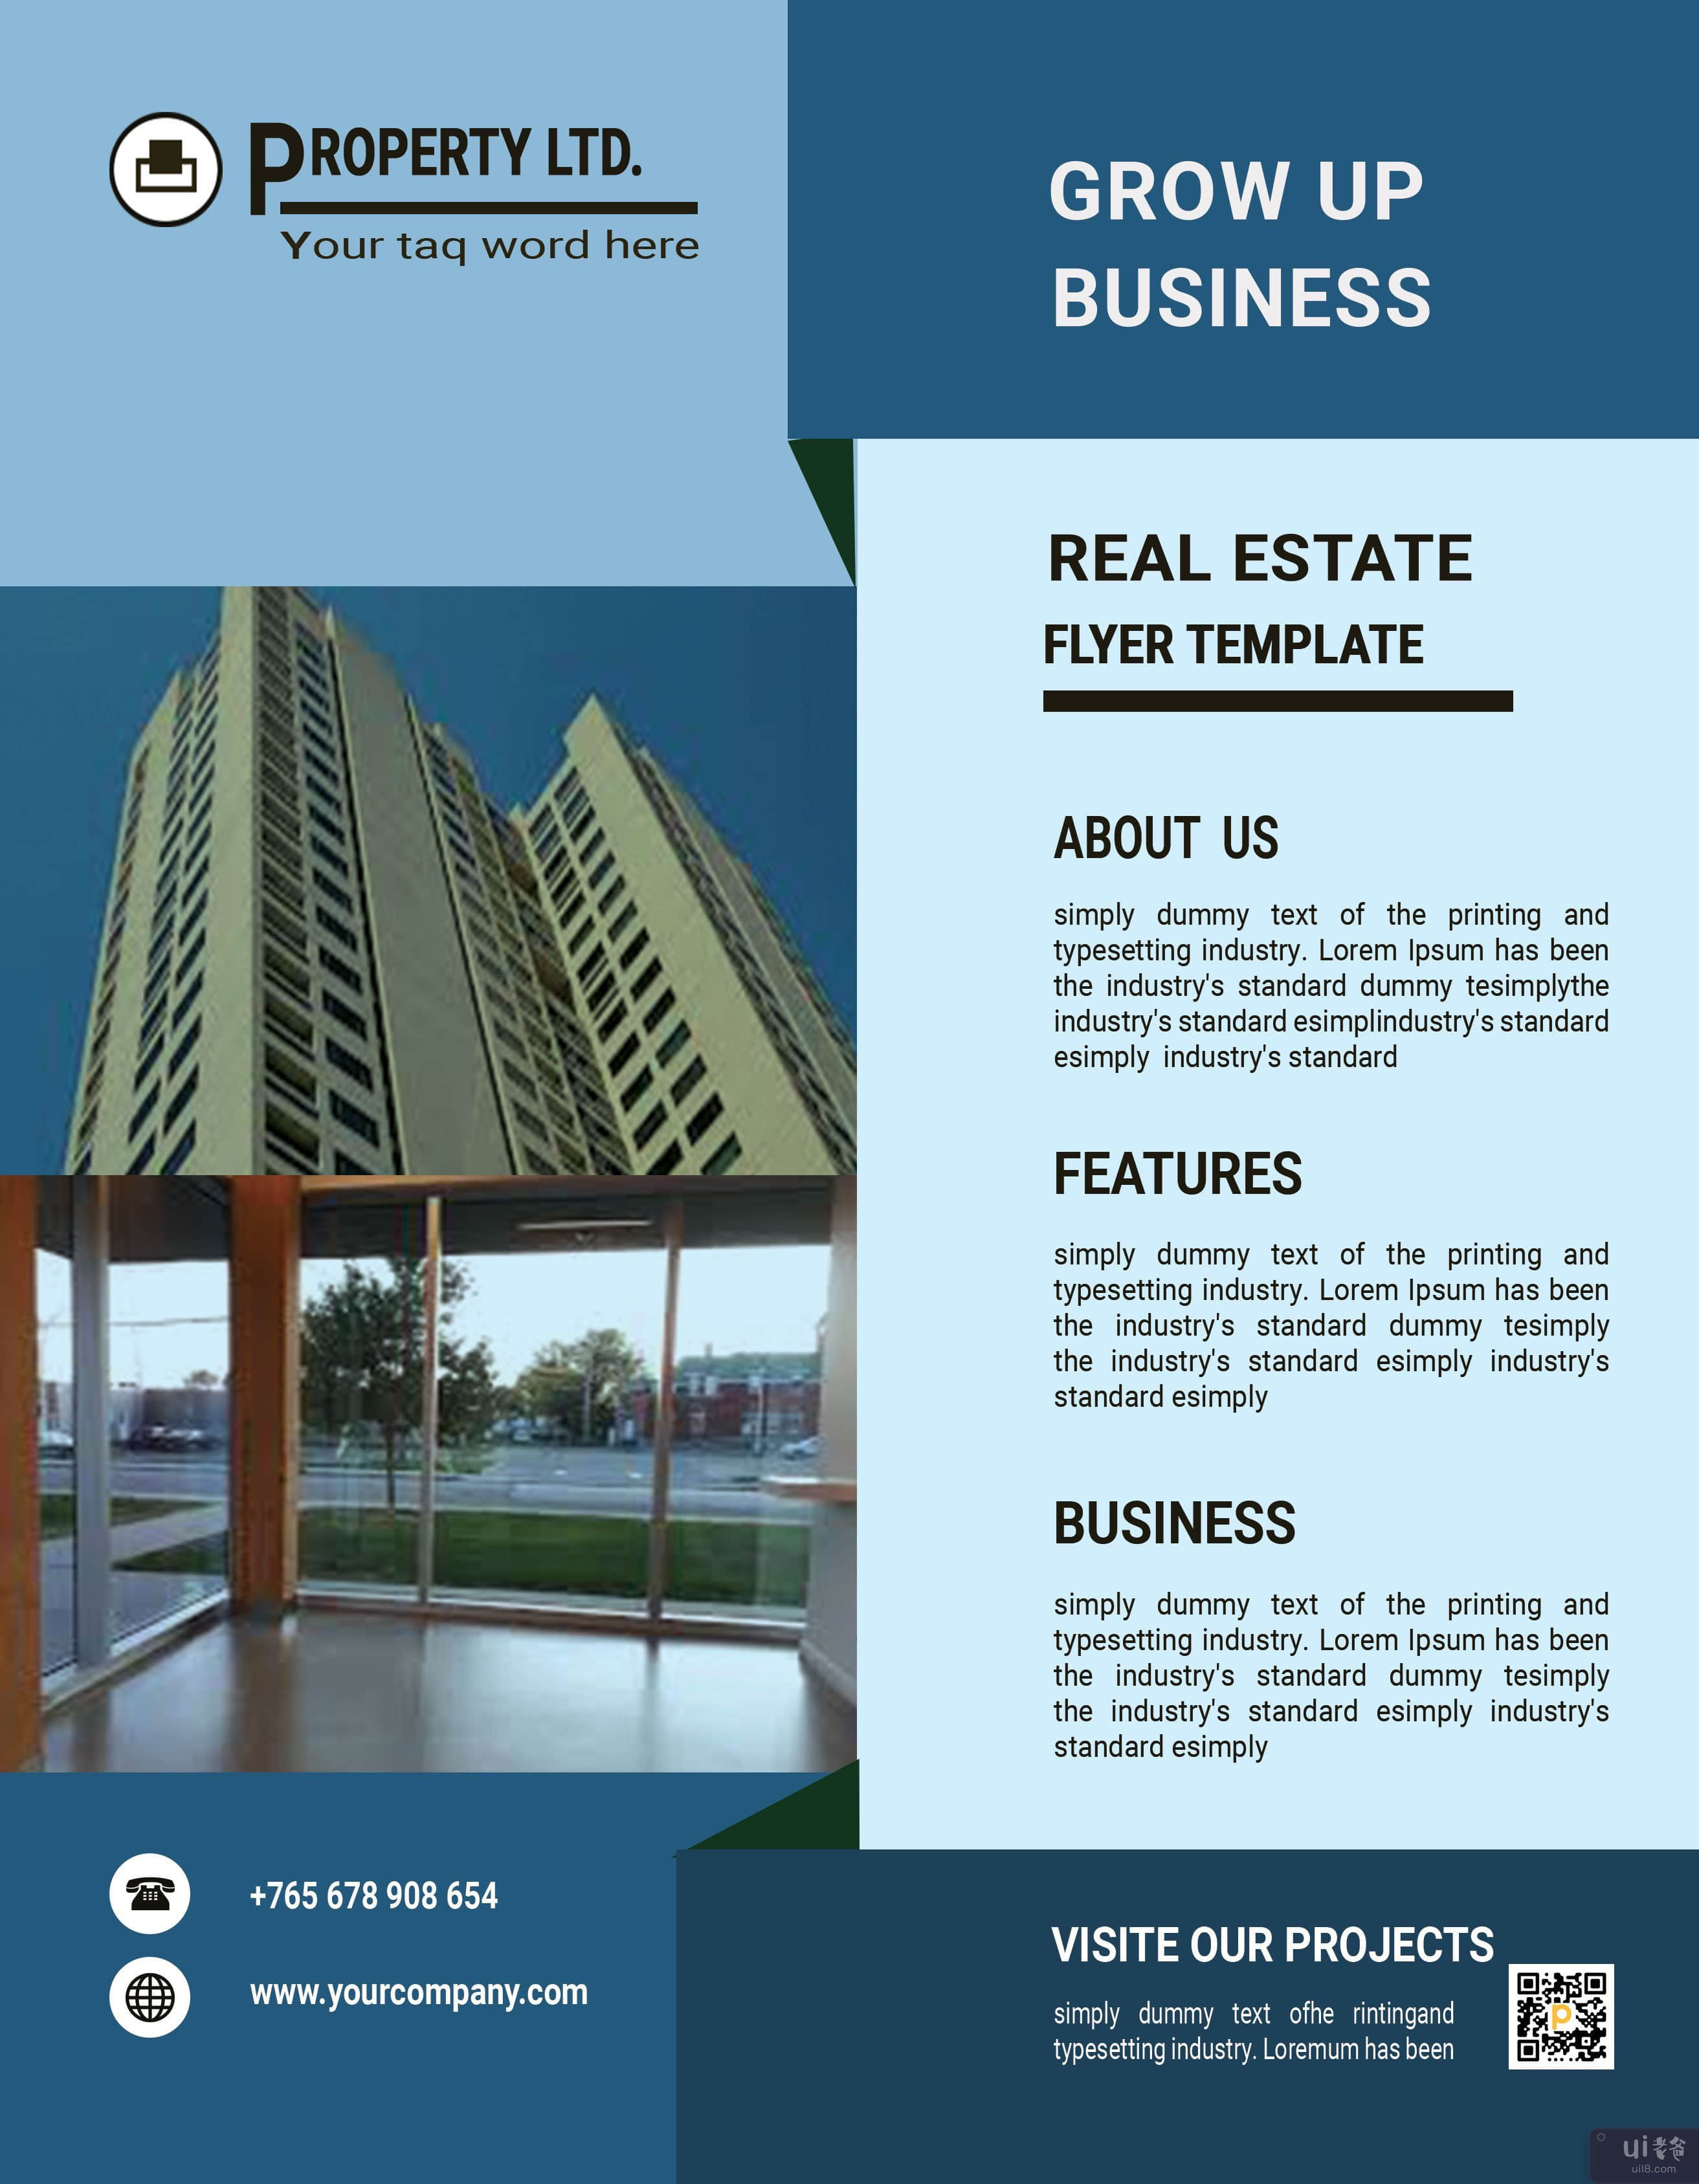 优雅的企业房地产传单模板(Elegant Corporate Real Estate Flyer Template)插图2